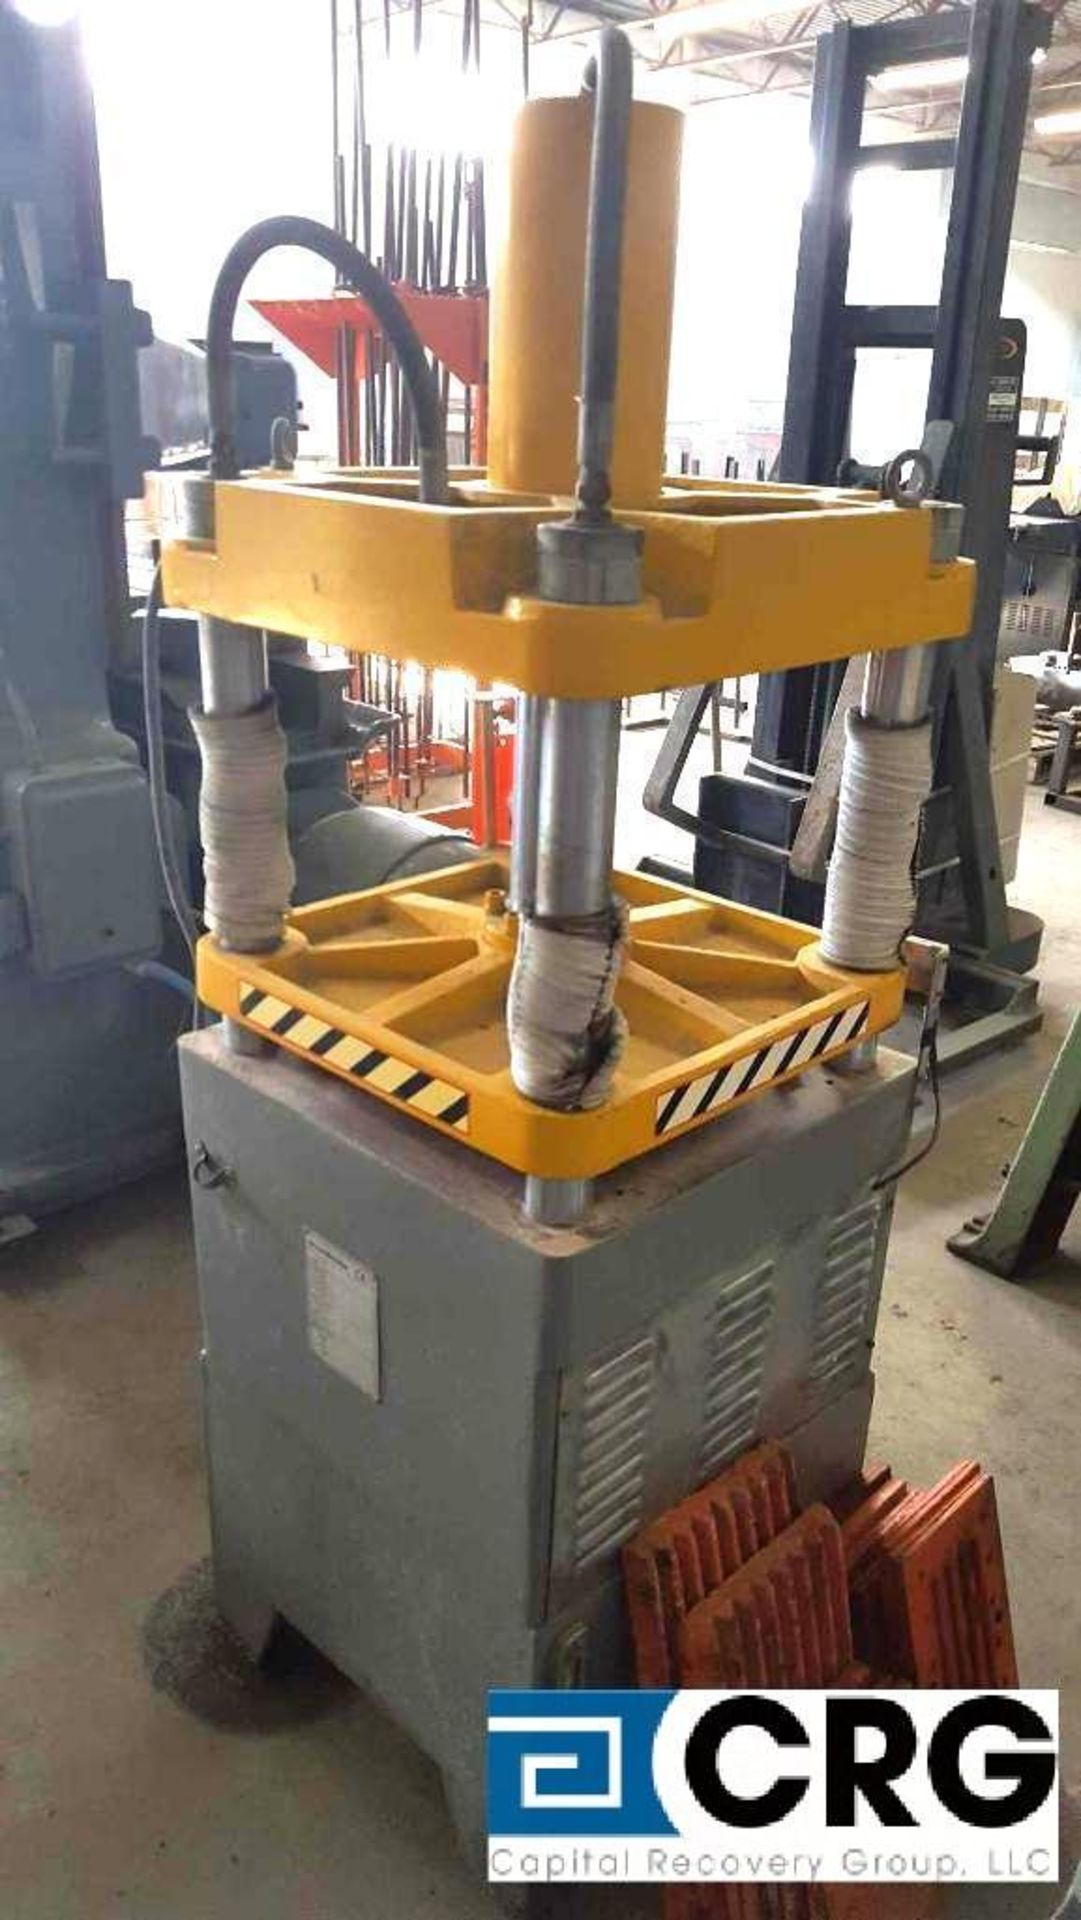 Stone Machine hydraulic press, type SY-S72,, stamping/splitting machine, exterior size 58 x 58 x 175 - Image 2 of 2